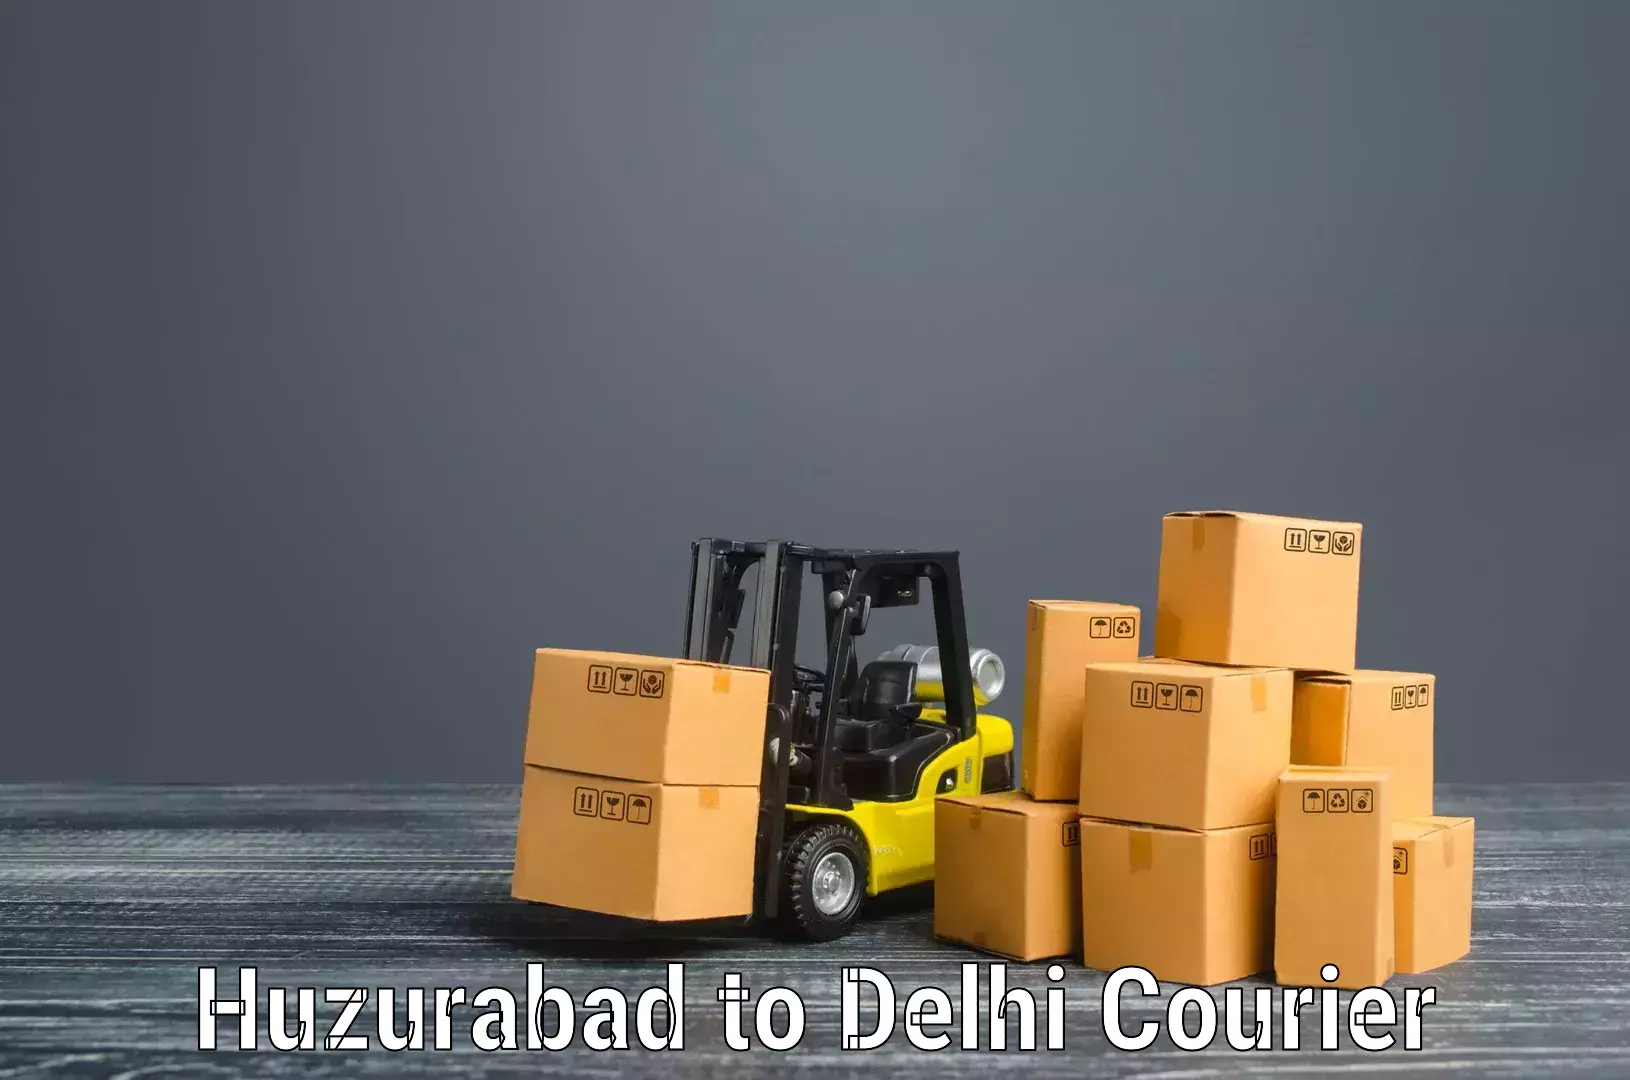 Expert goods movers Huzurabad to NCR